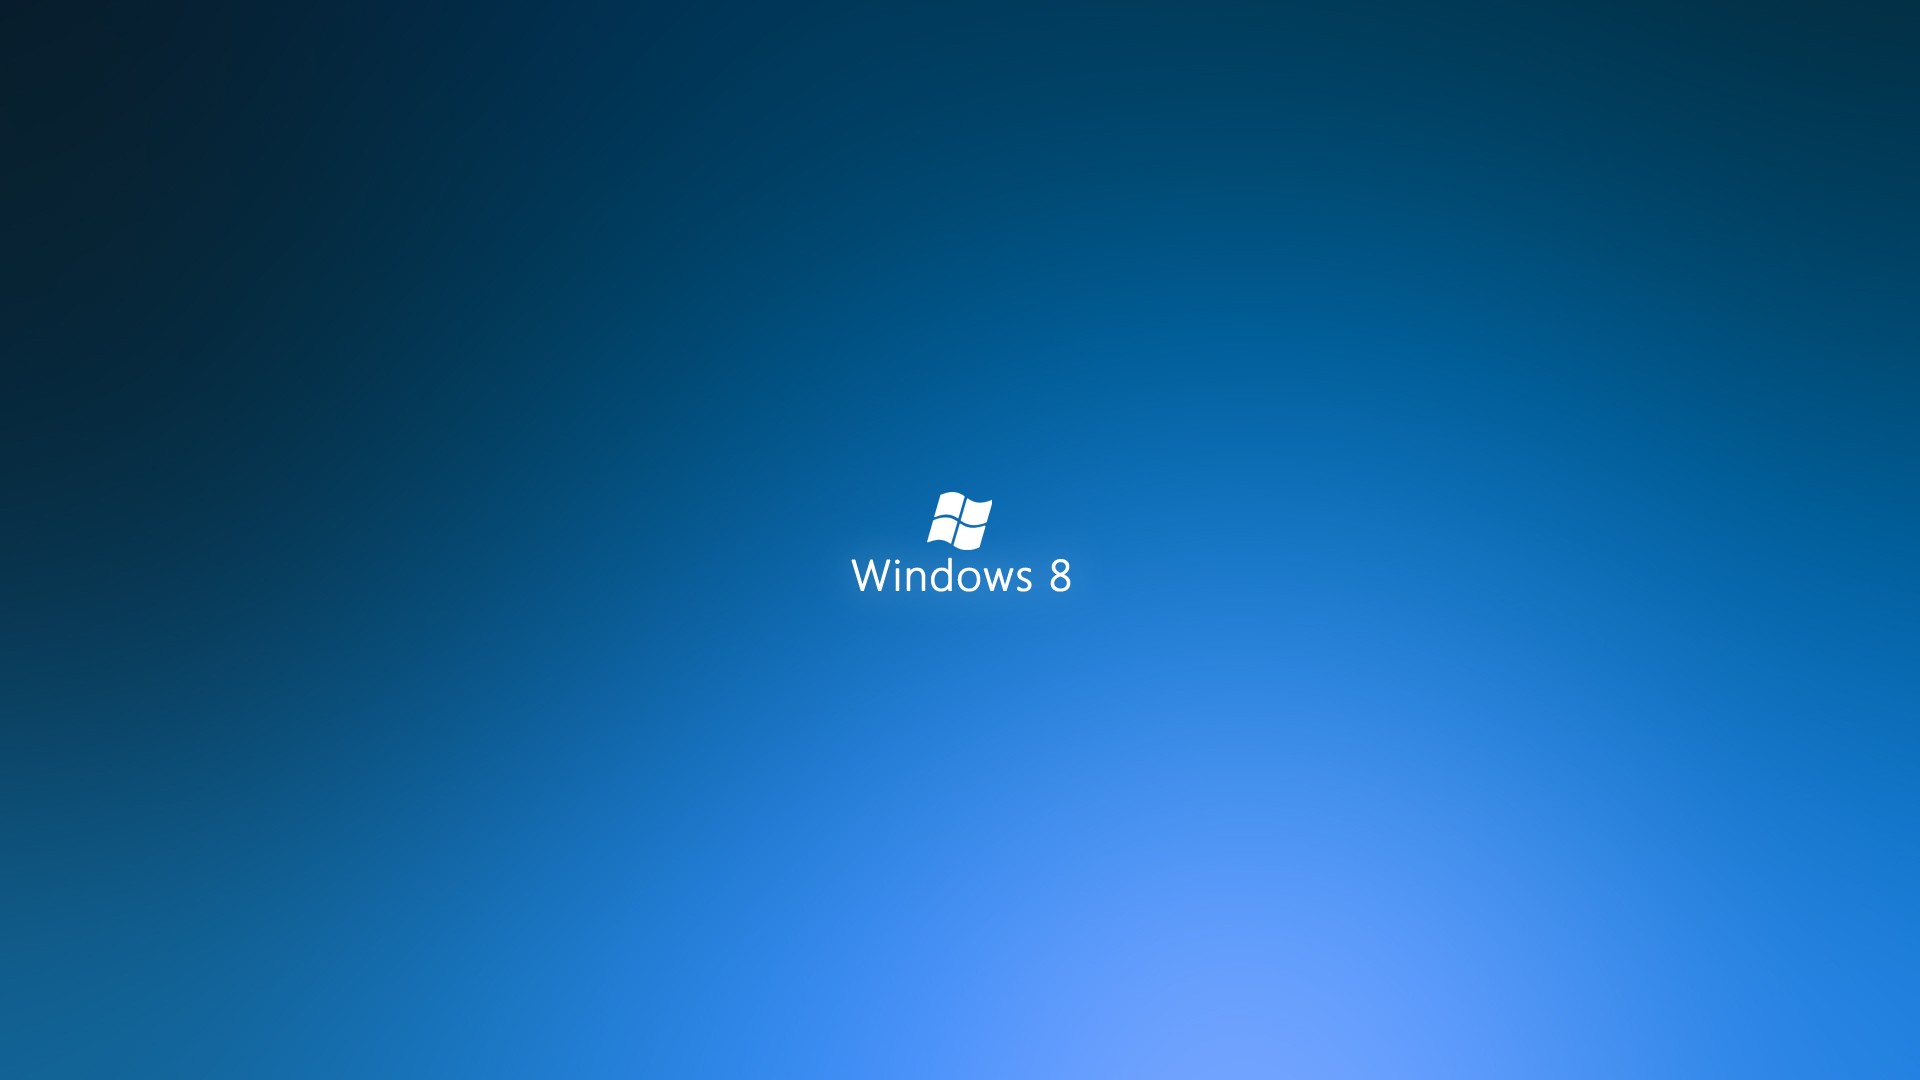 Windows 8 - desktop wallpaper